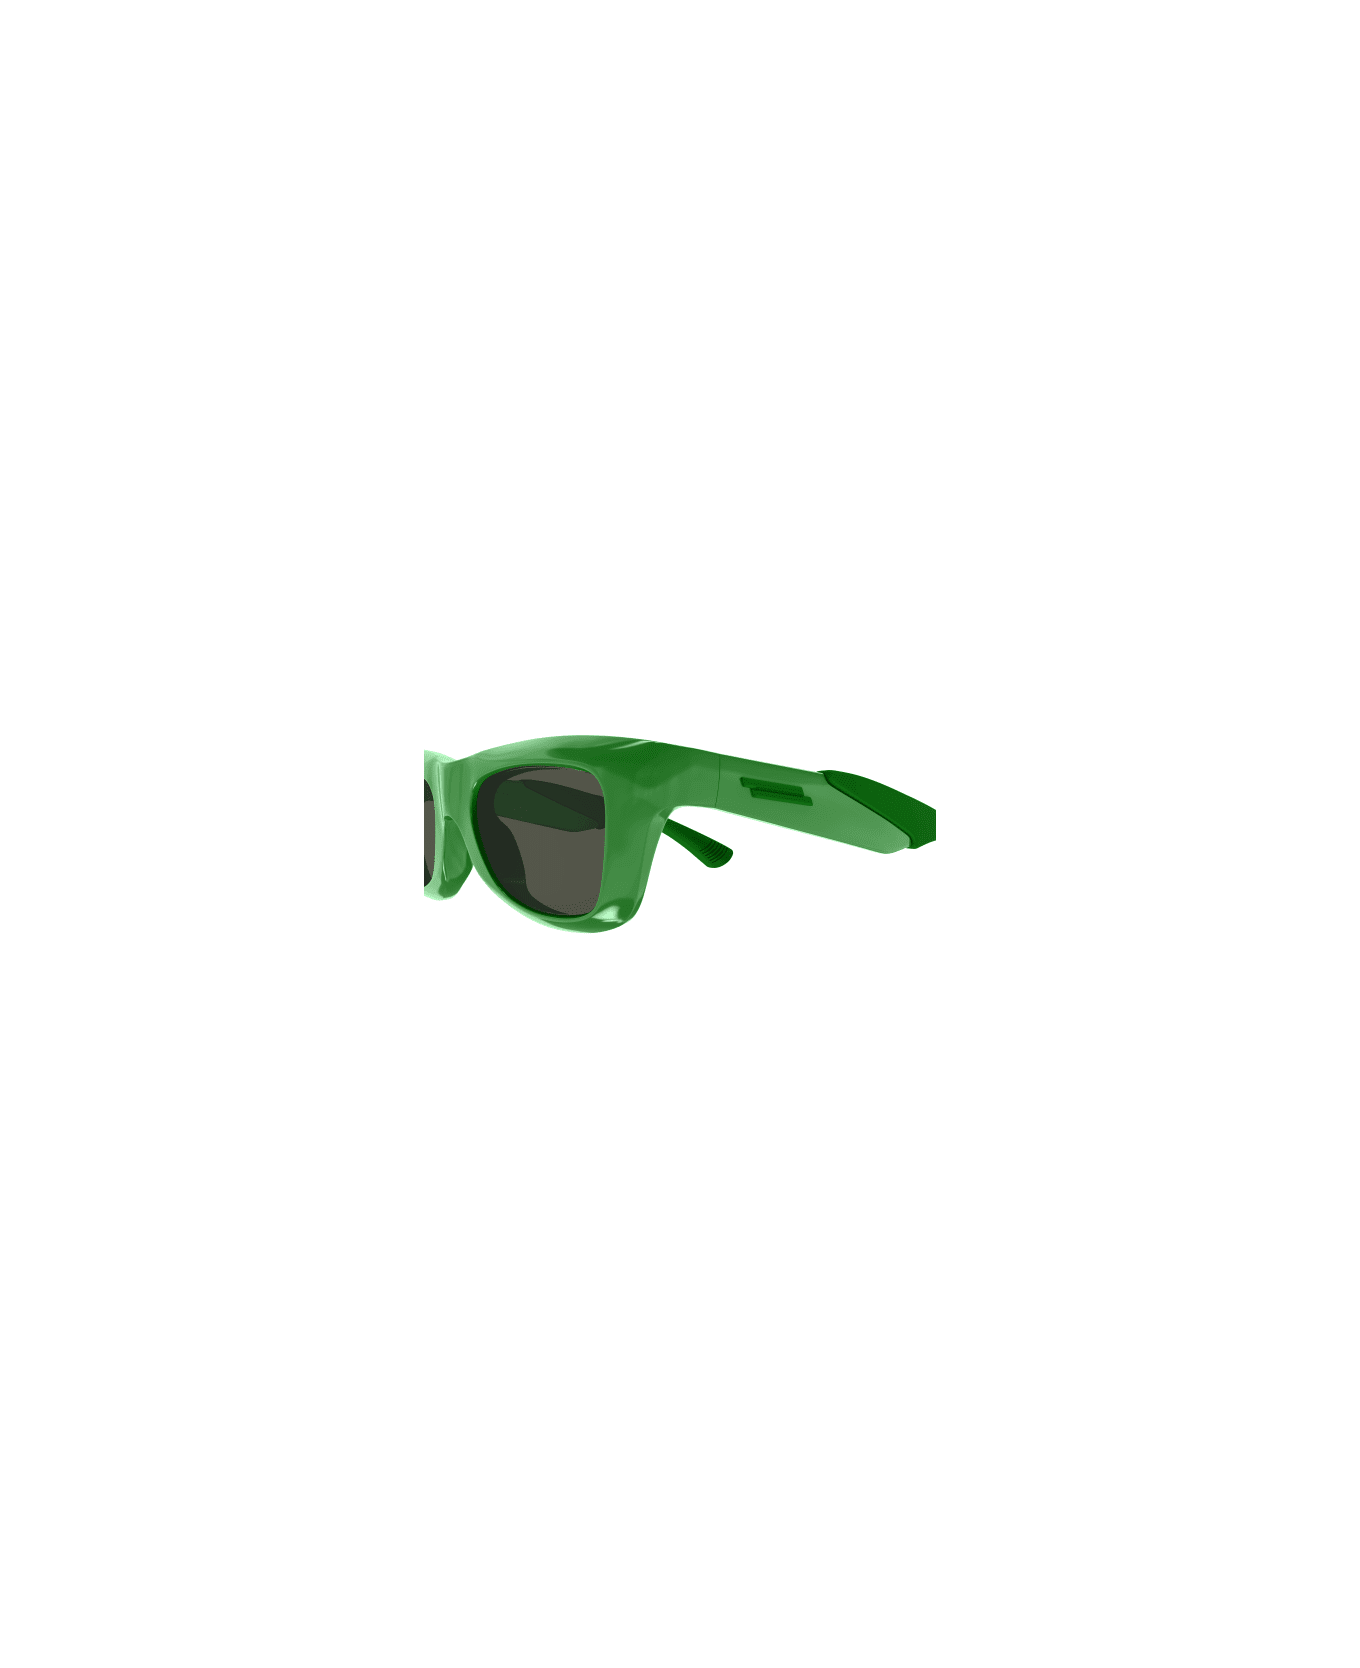 Bottega Veneta Eyewear 1e3n4id0a - Green Green Green